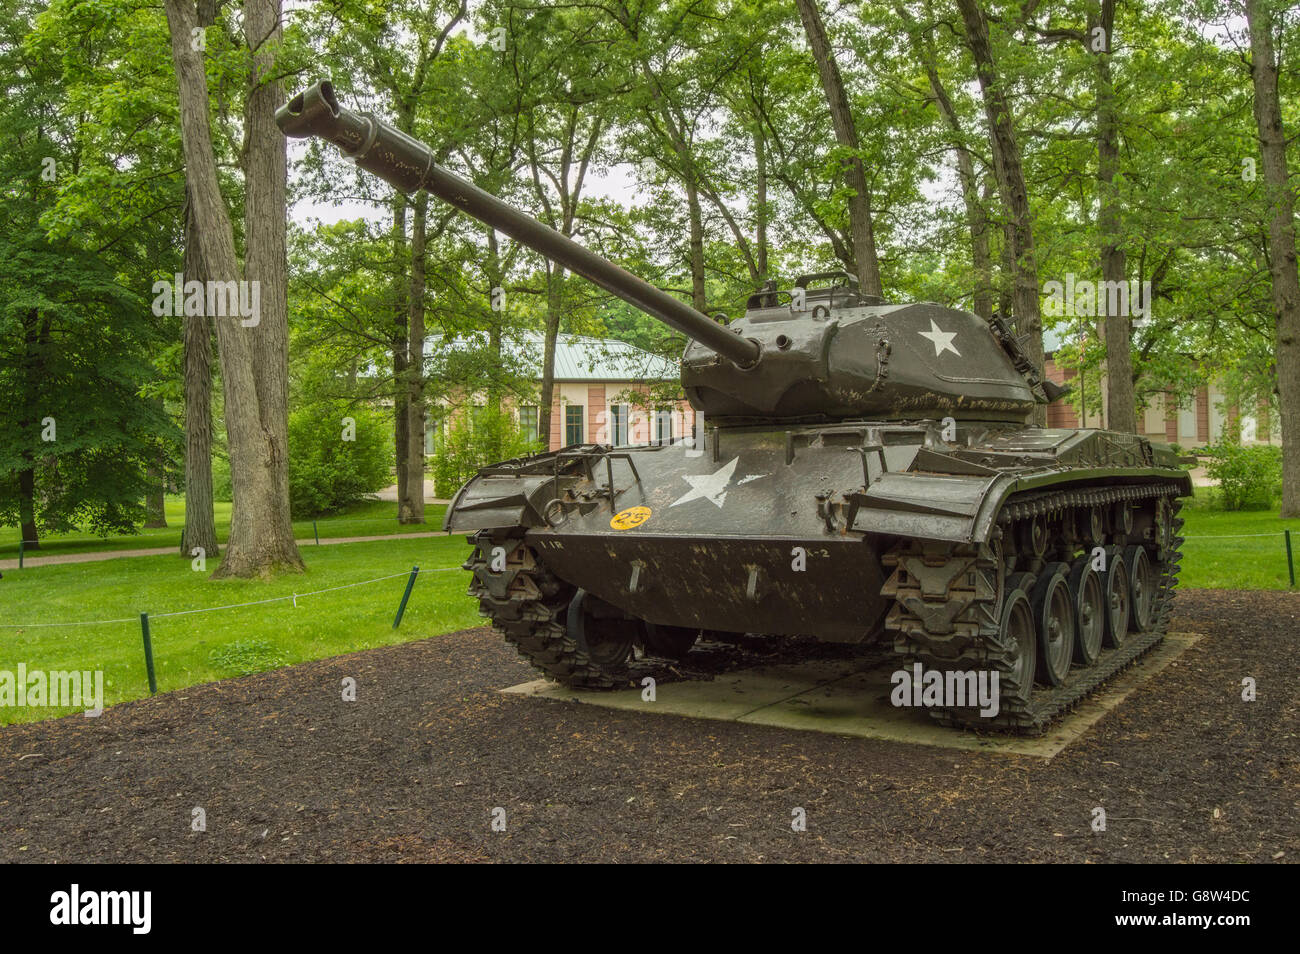 M41 Walker Bulldog Light tank Stock Photo - Alamy